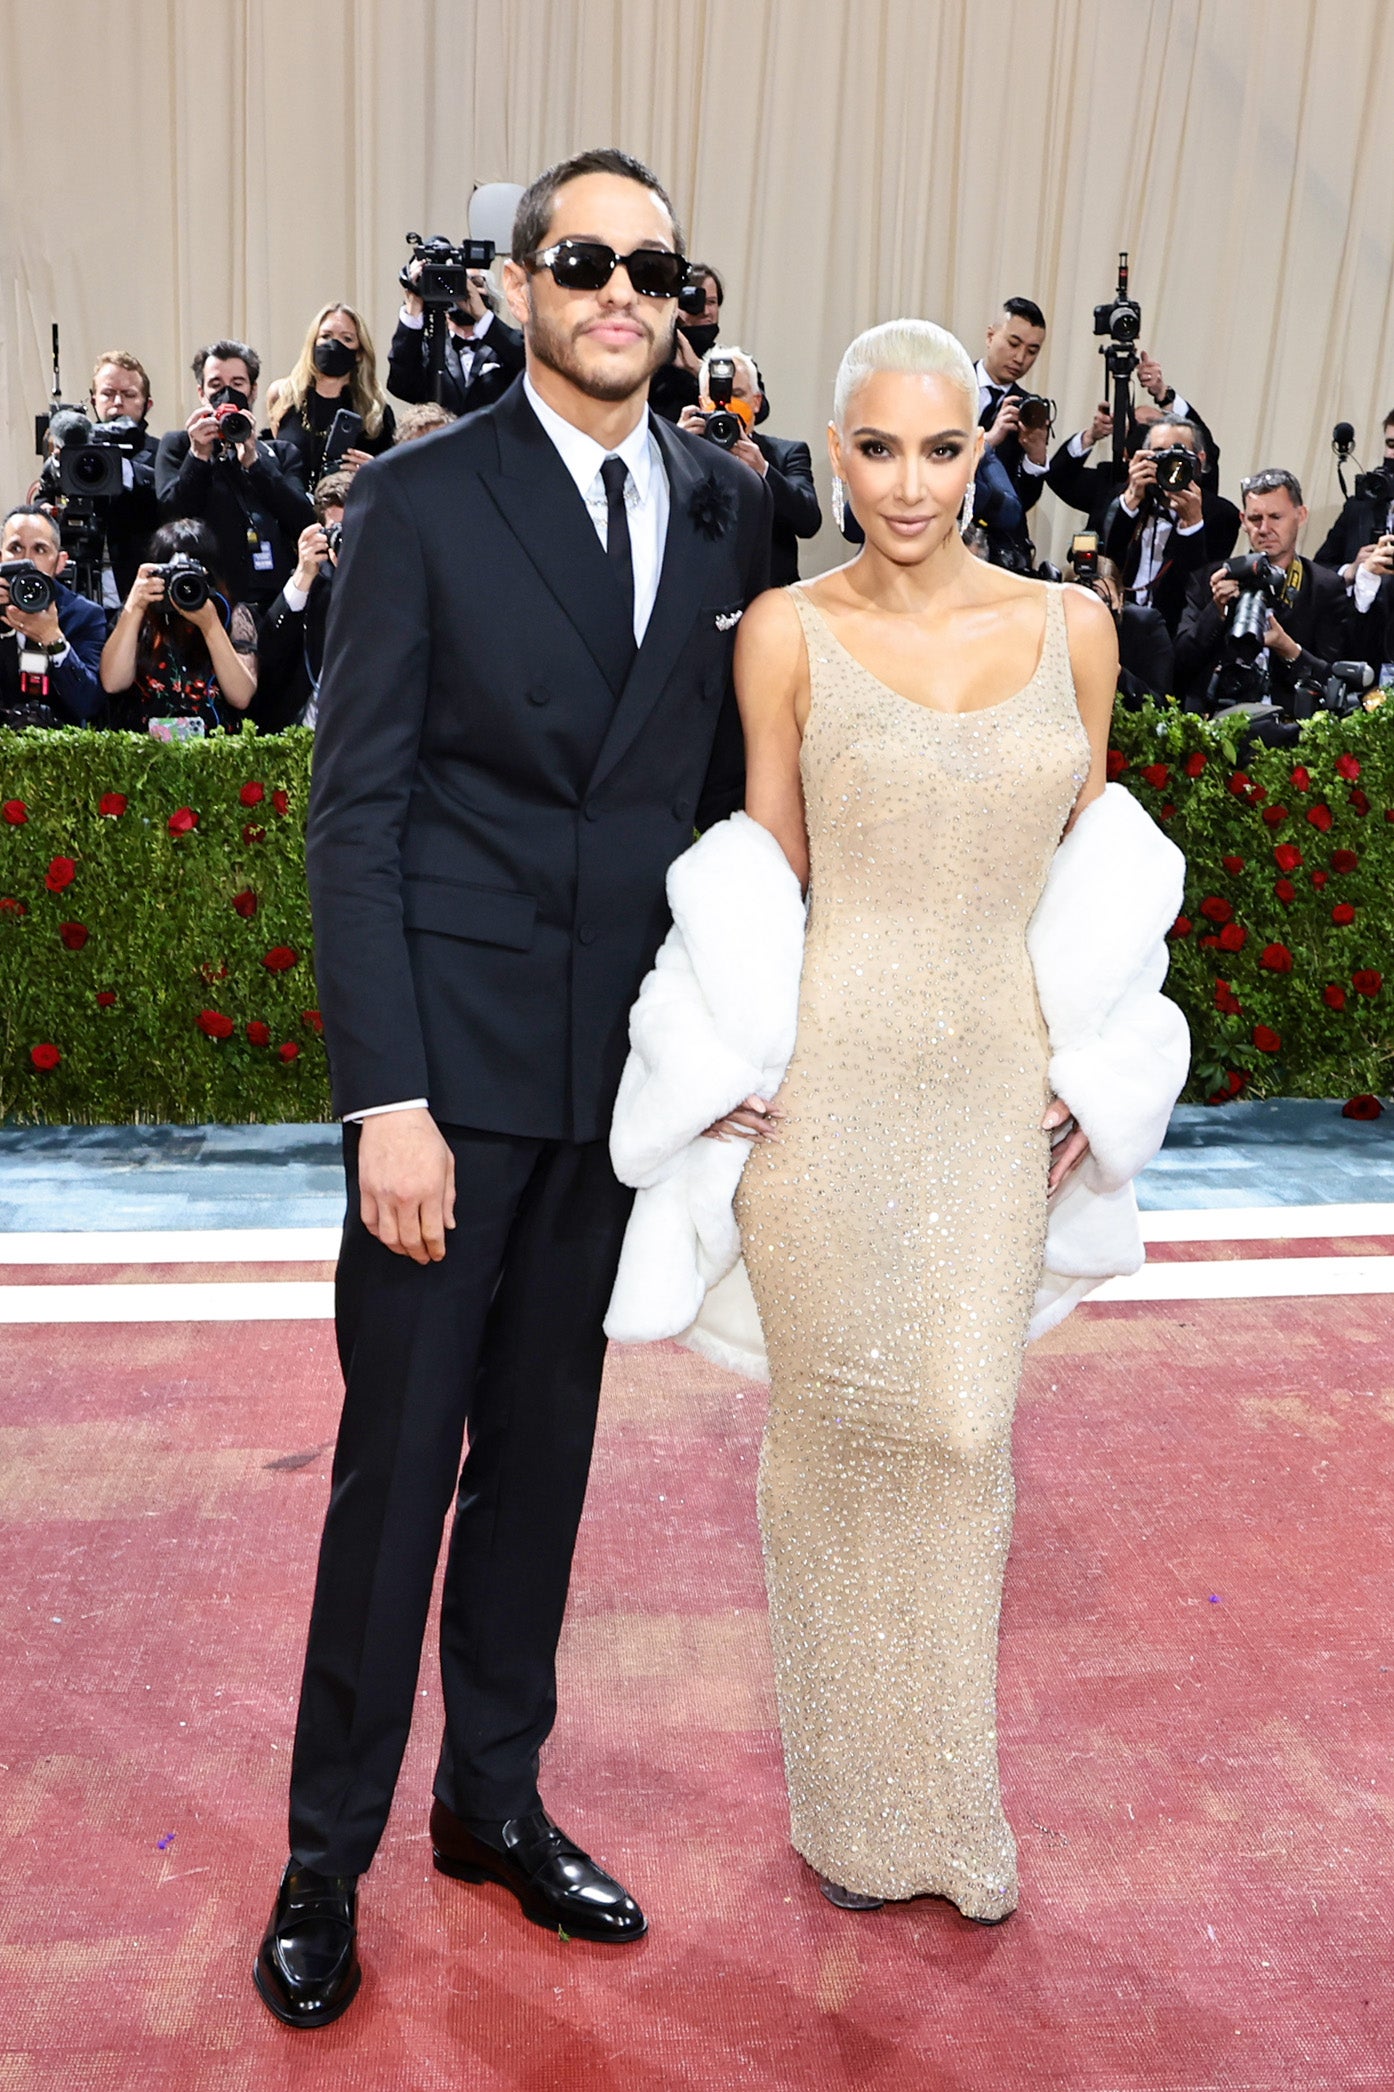 Kim Kardashian attended the Met Gala with her boyfriend, Pete Davidson